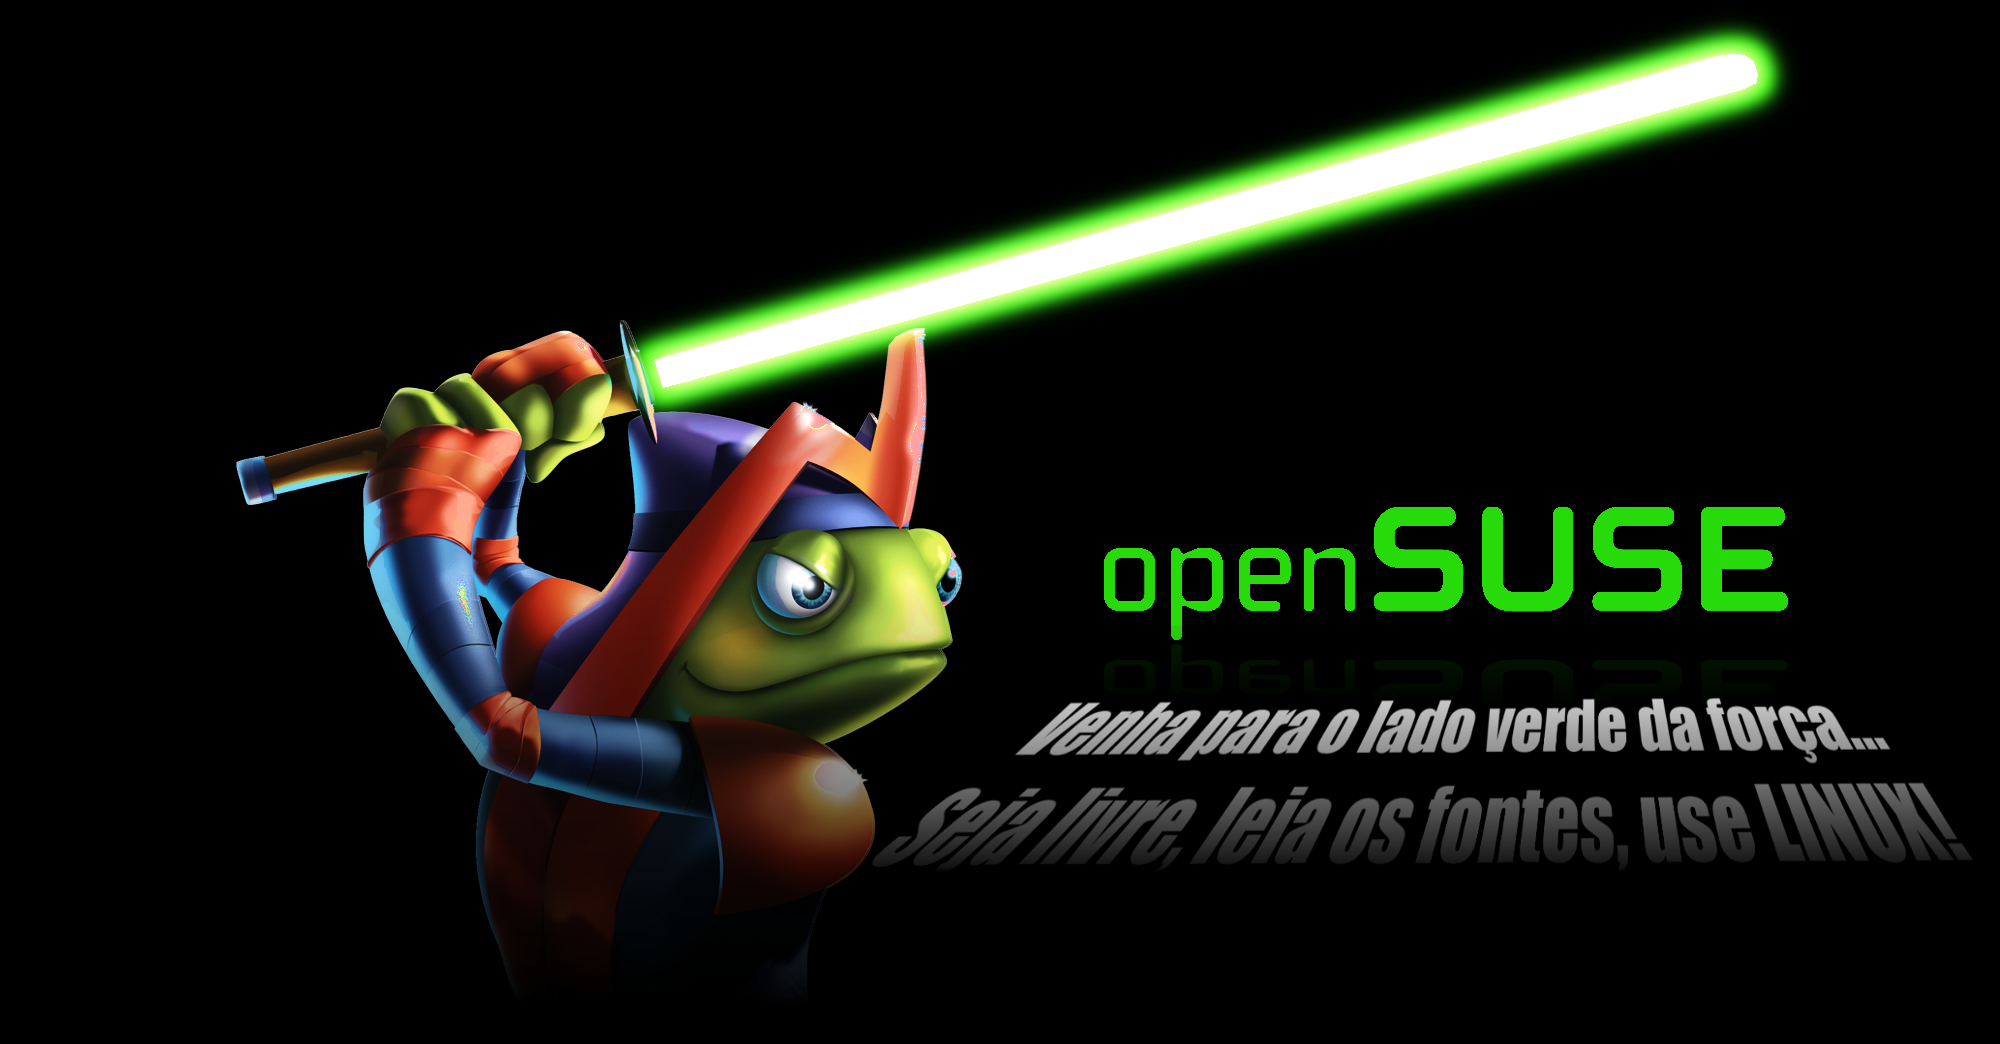 openSUSE Lizards